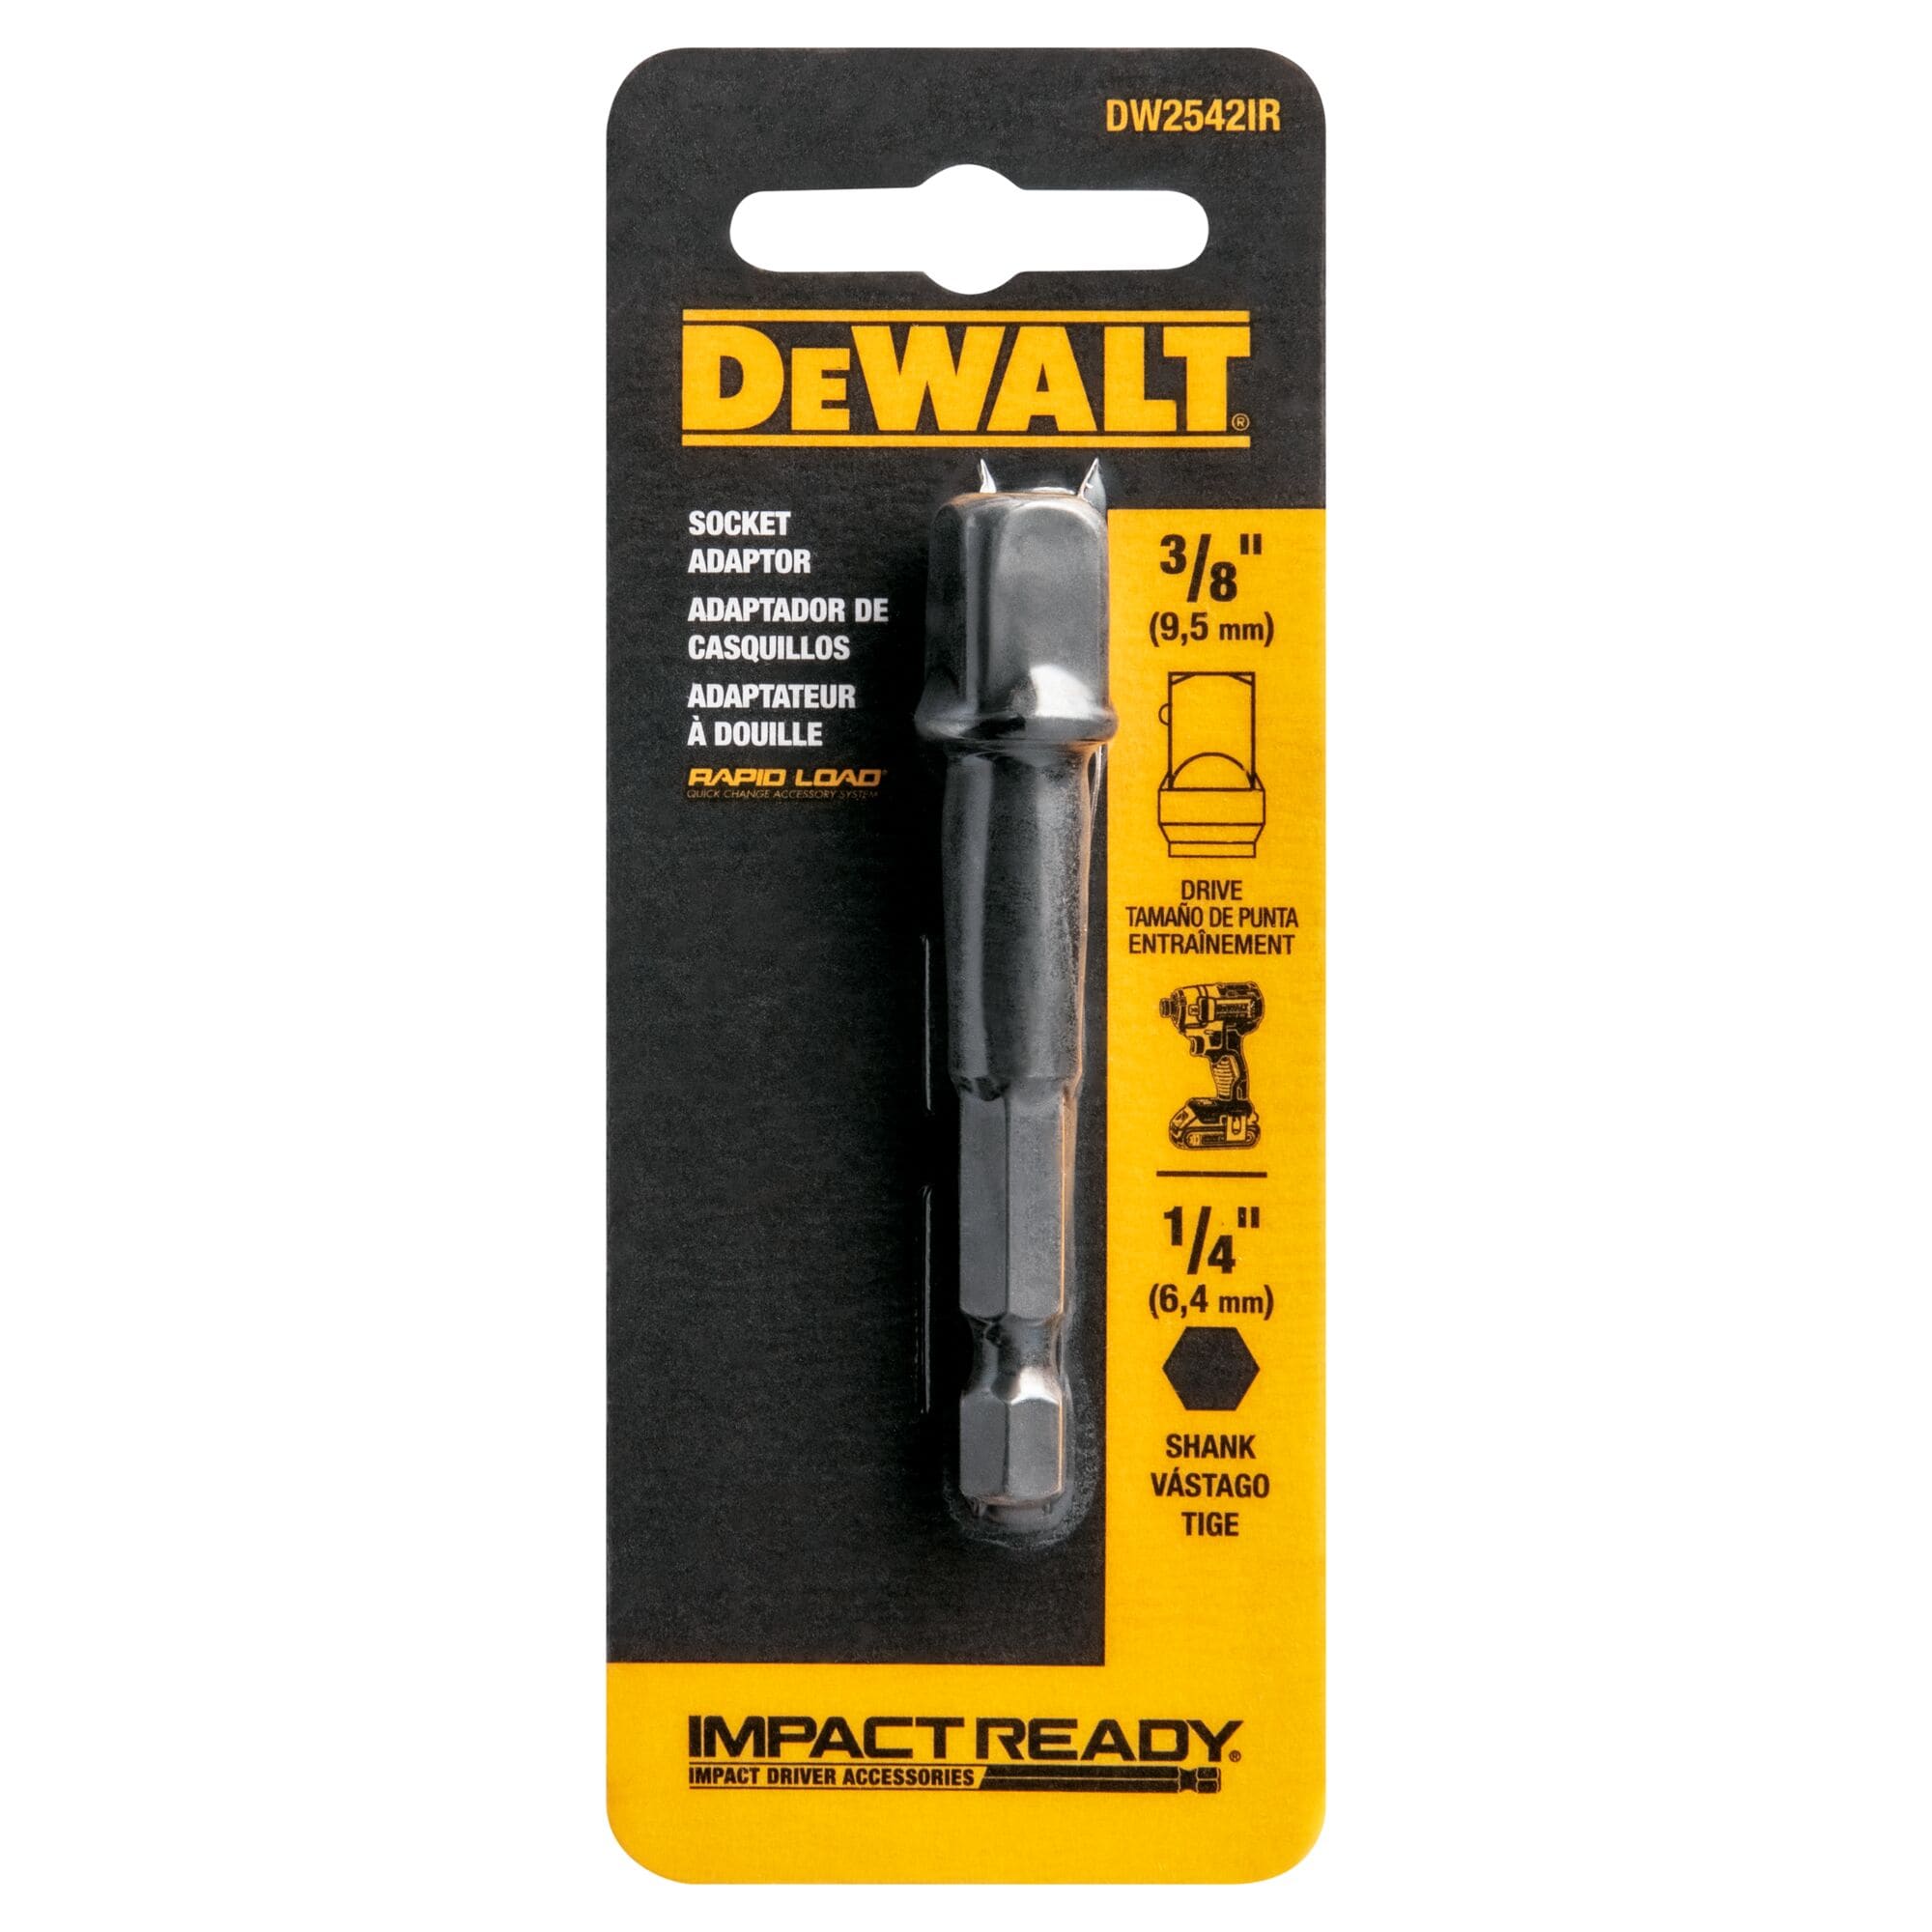 DW2542IR-Socket Adapter-DEWALT/BLACK & DECKER